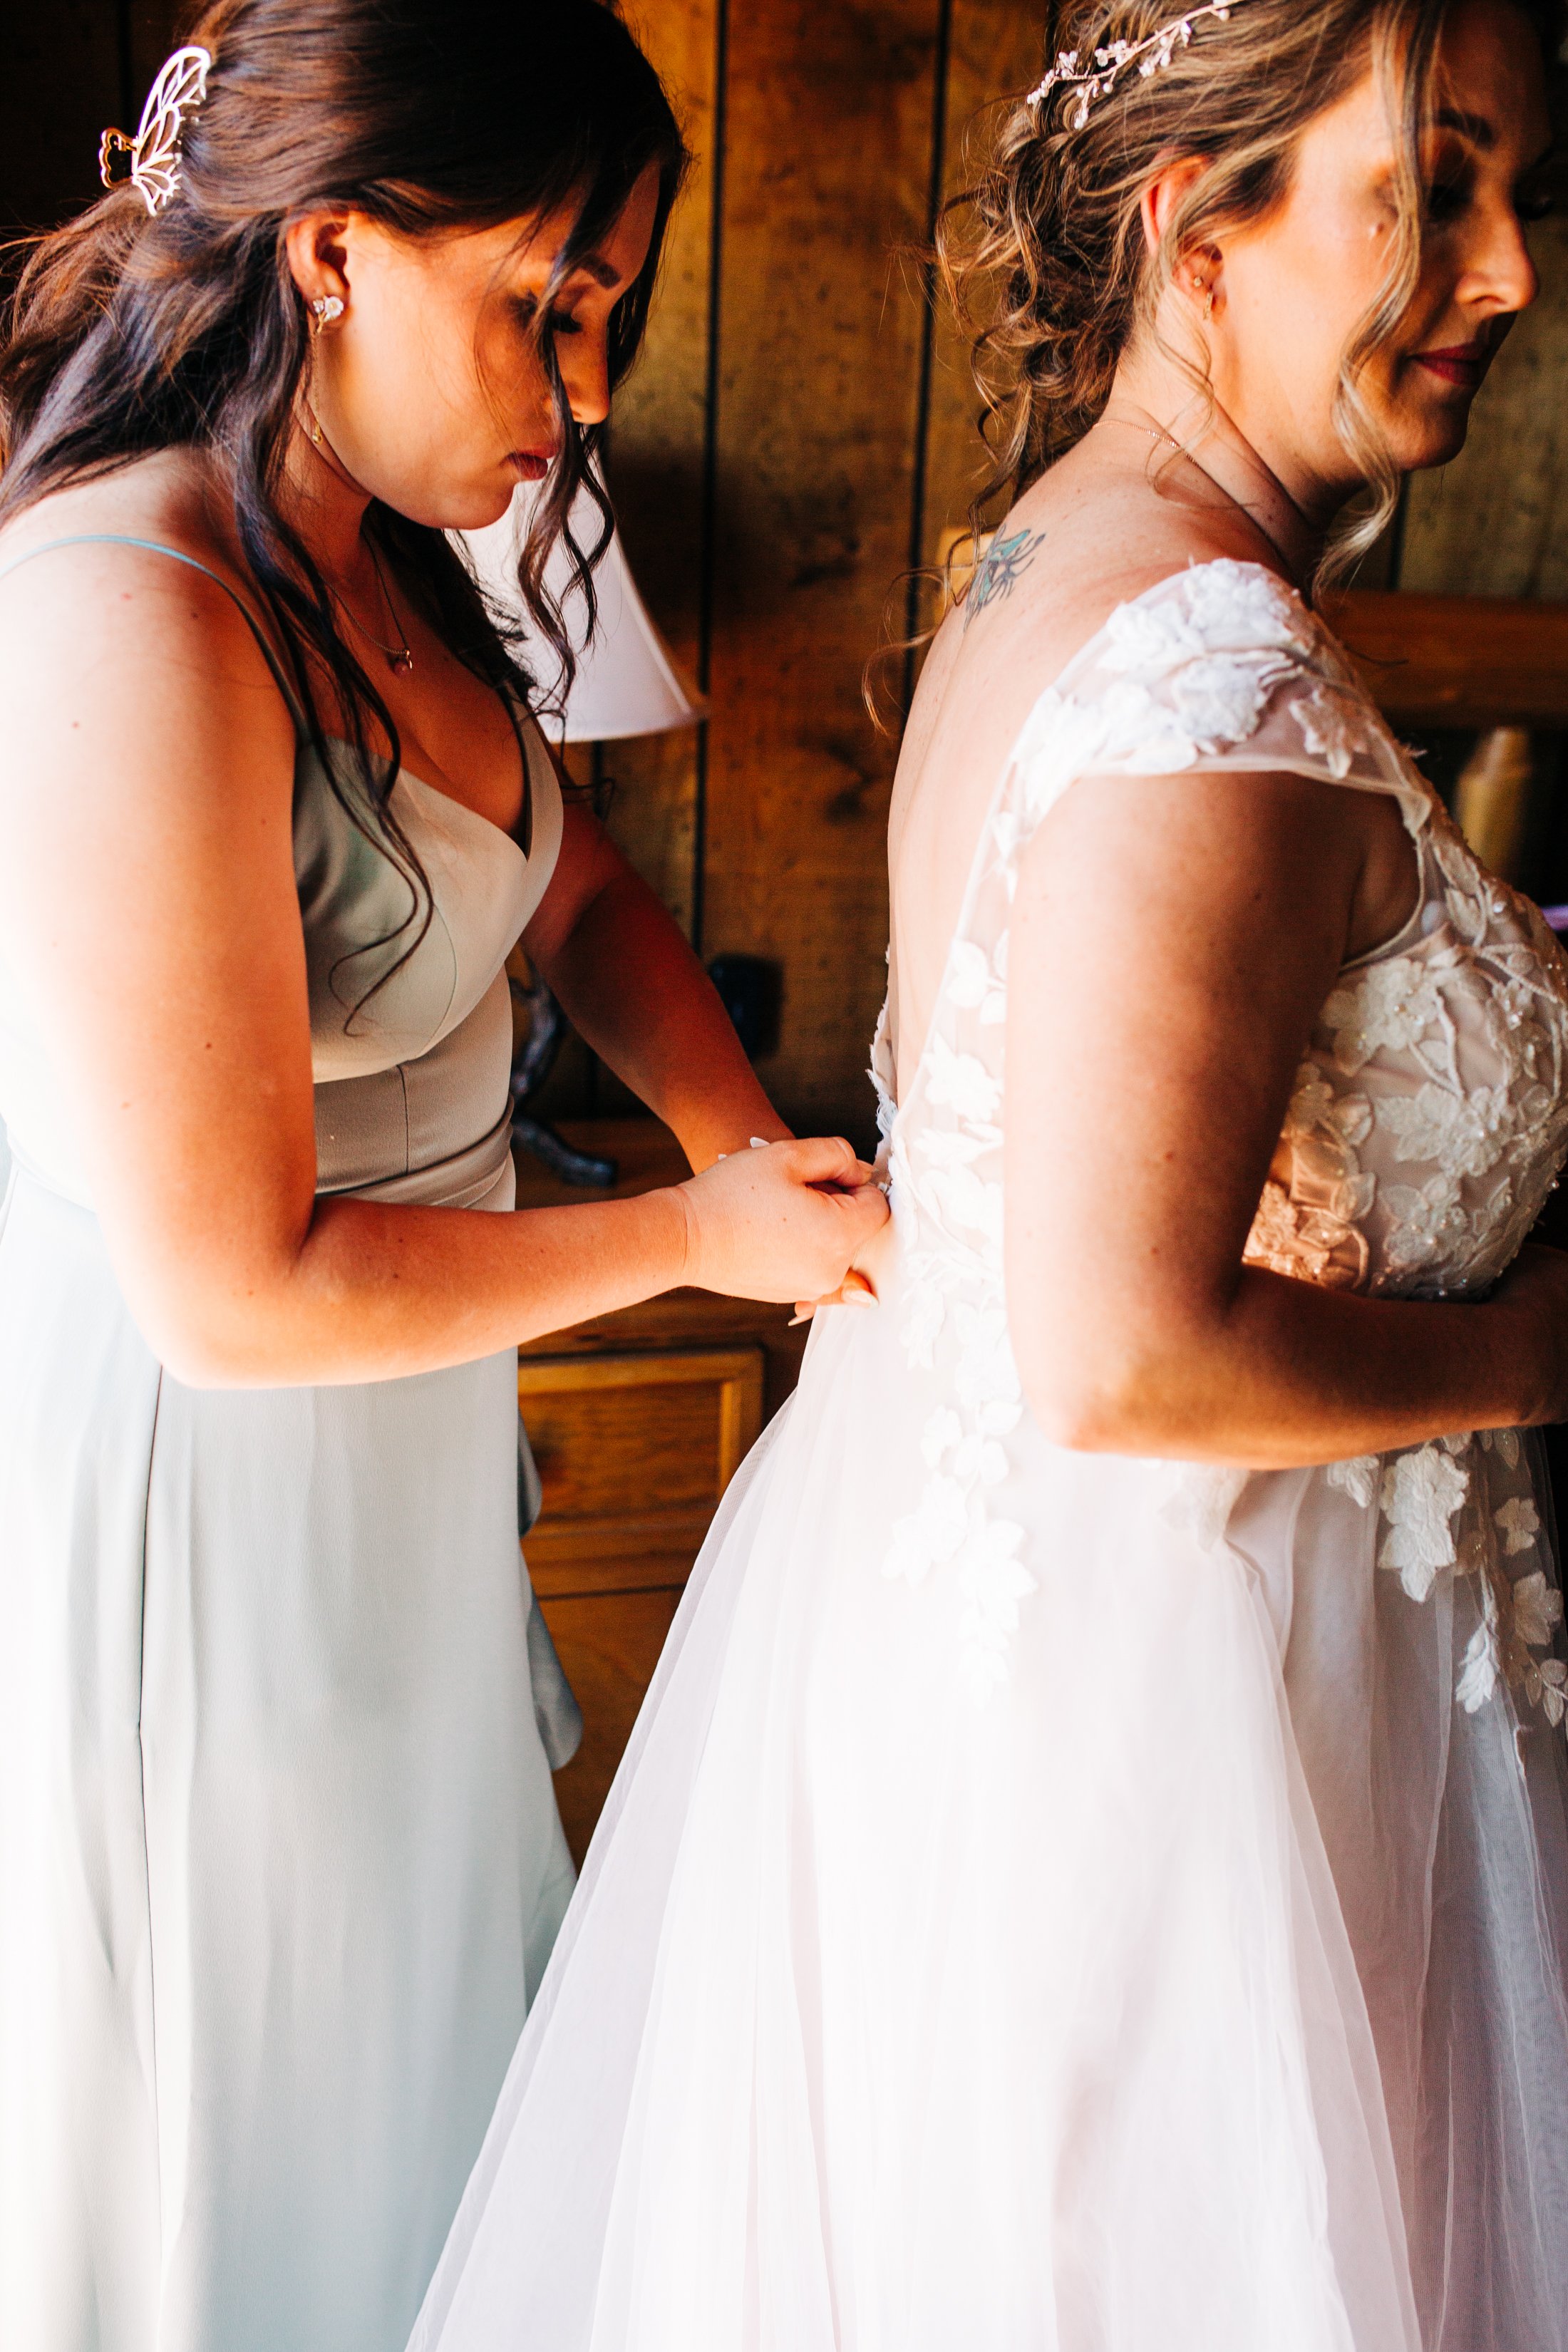 maid of honor zipping up brides dress.jpg